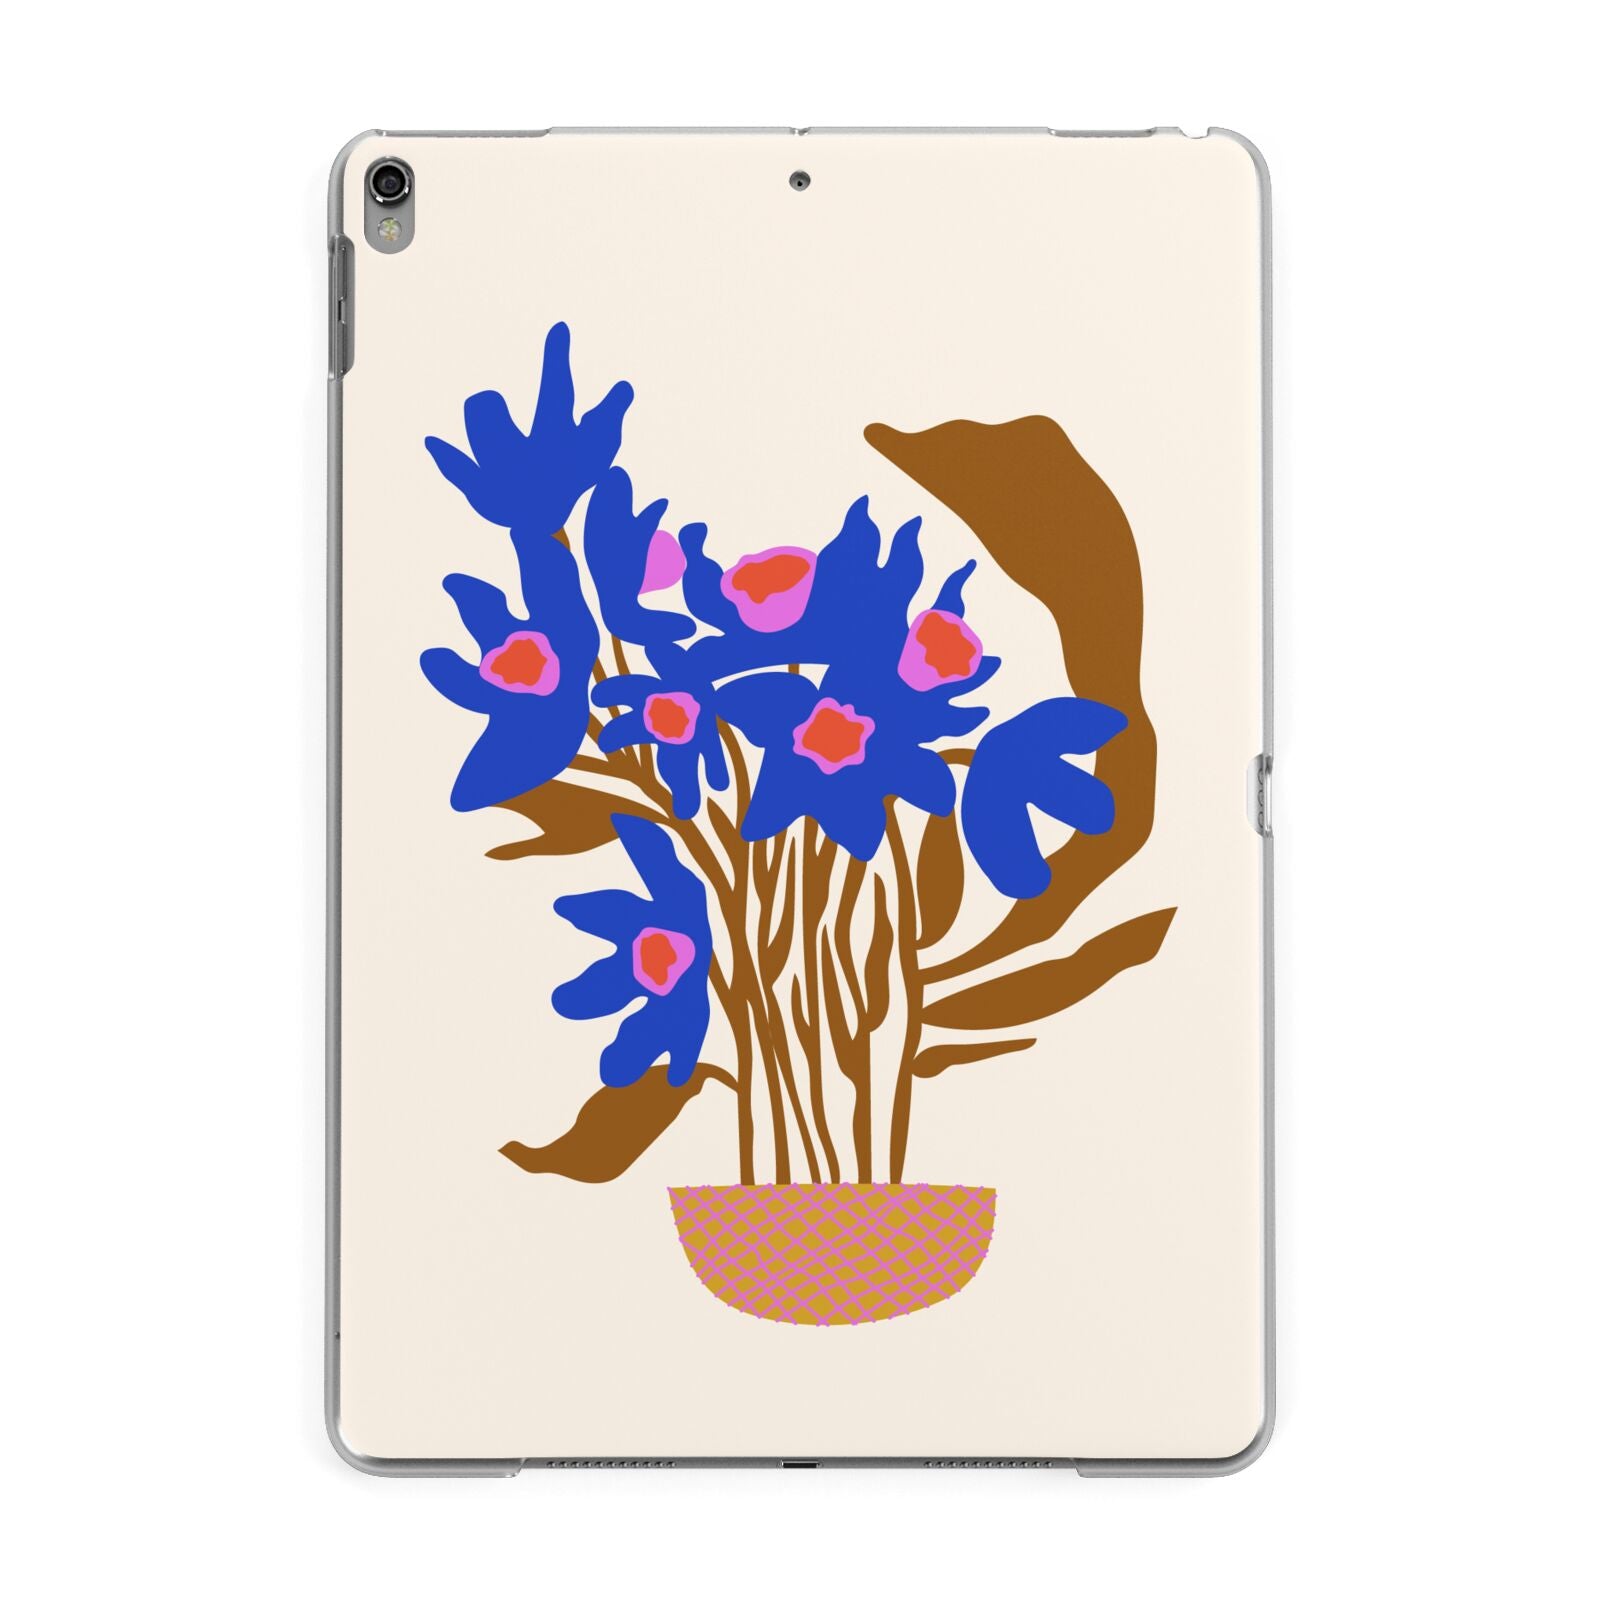 Flowers in a Vase Apple iPad Grey Case